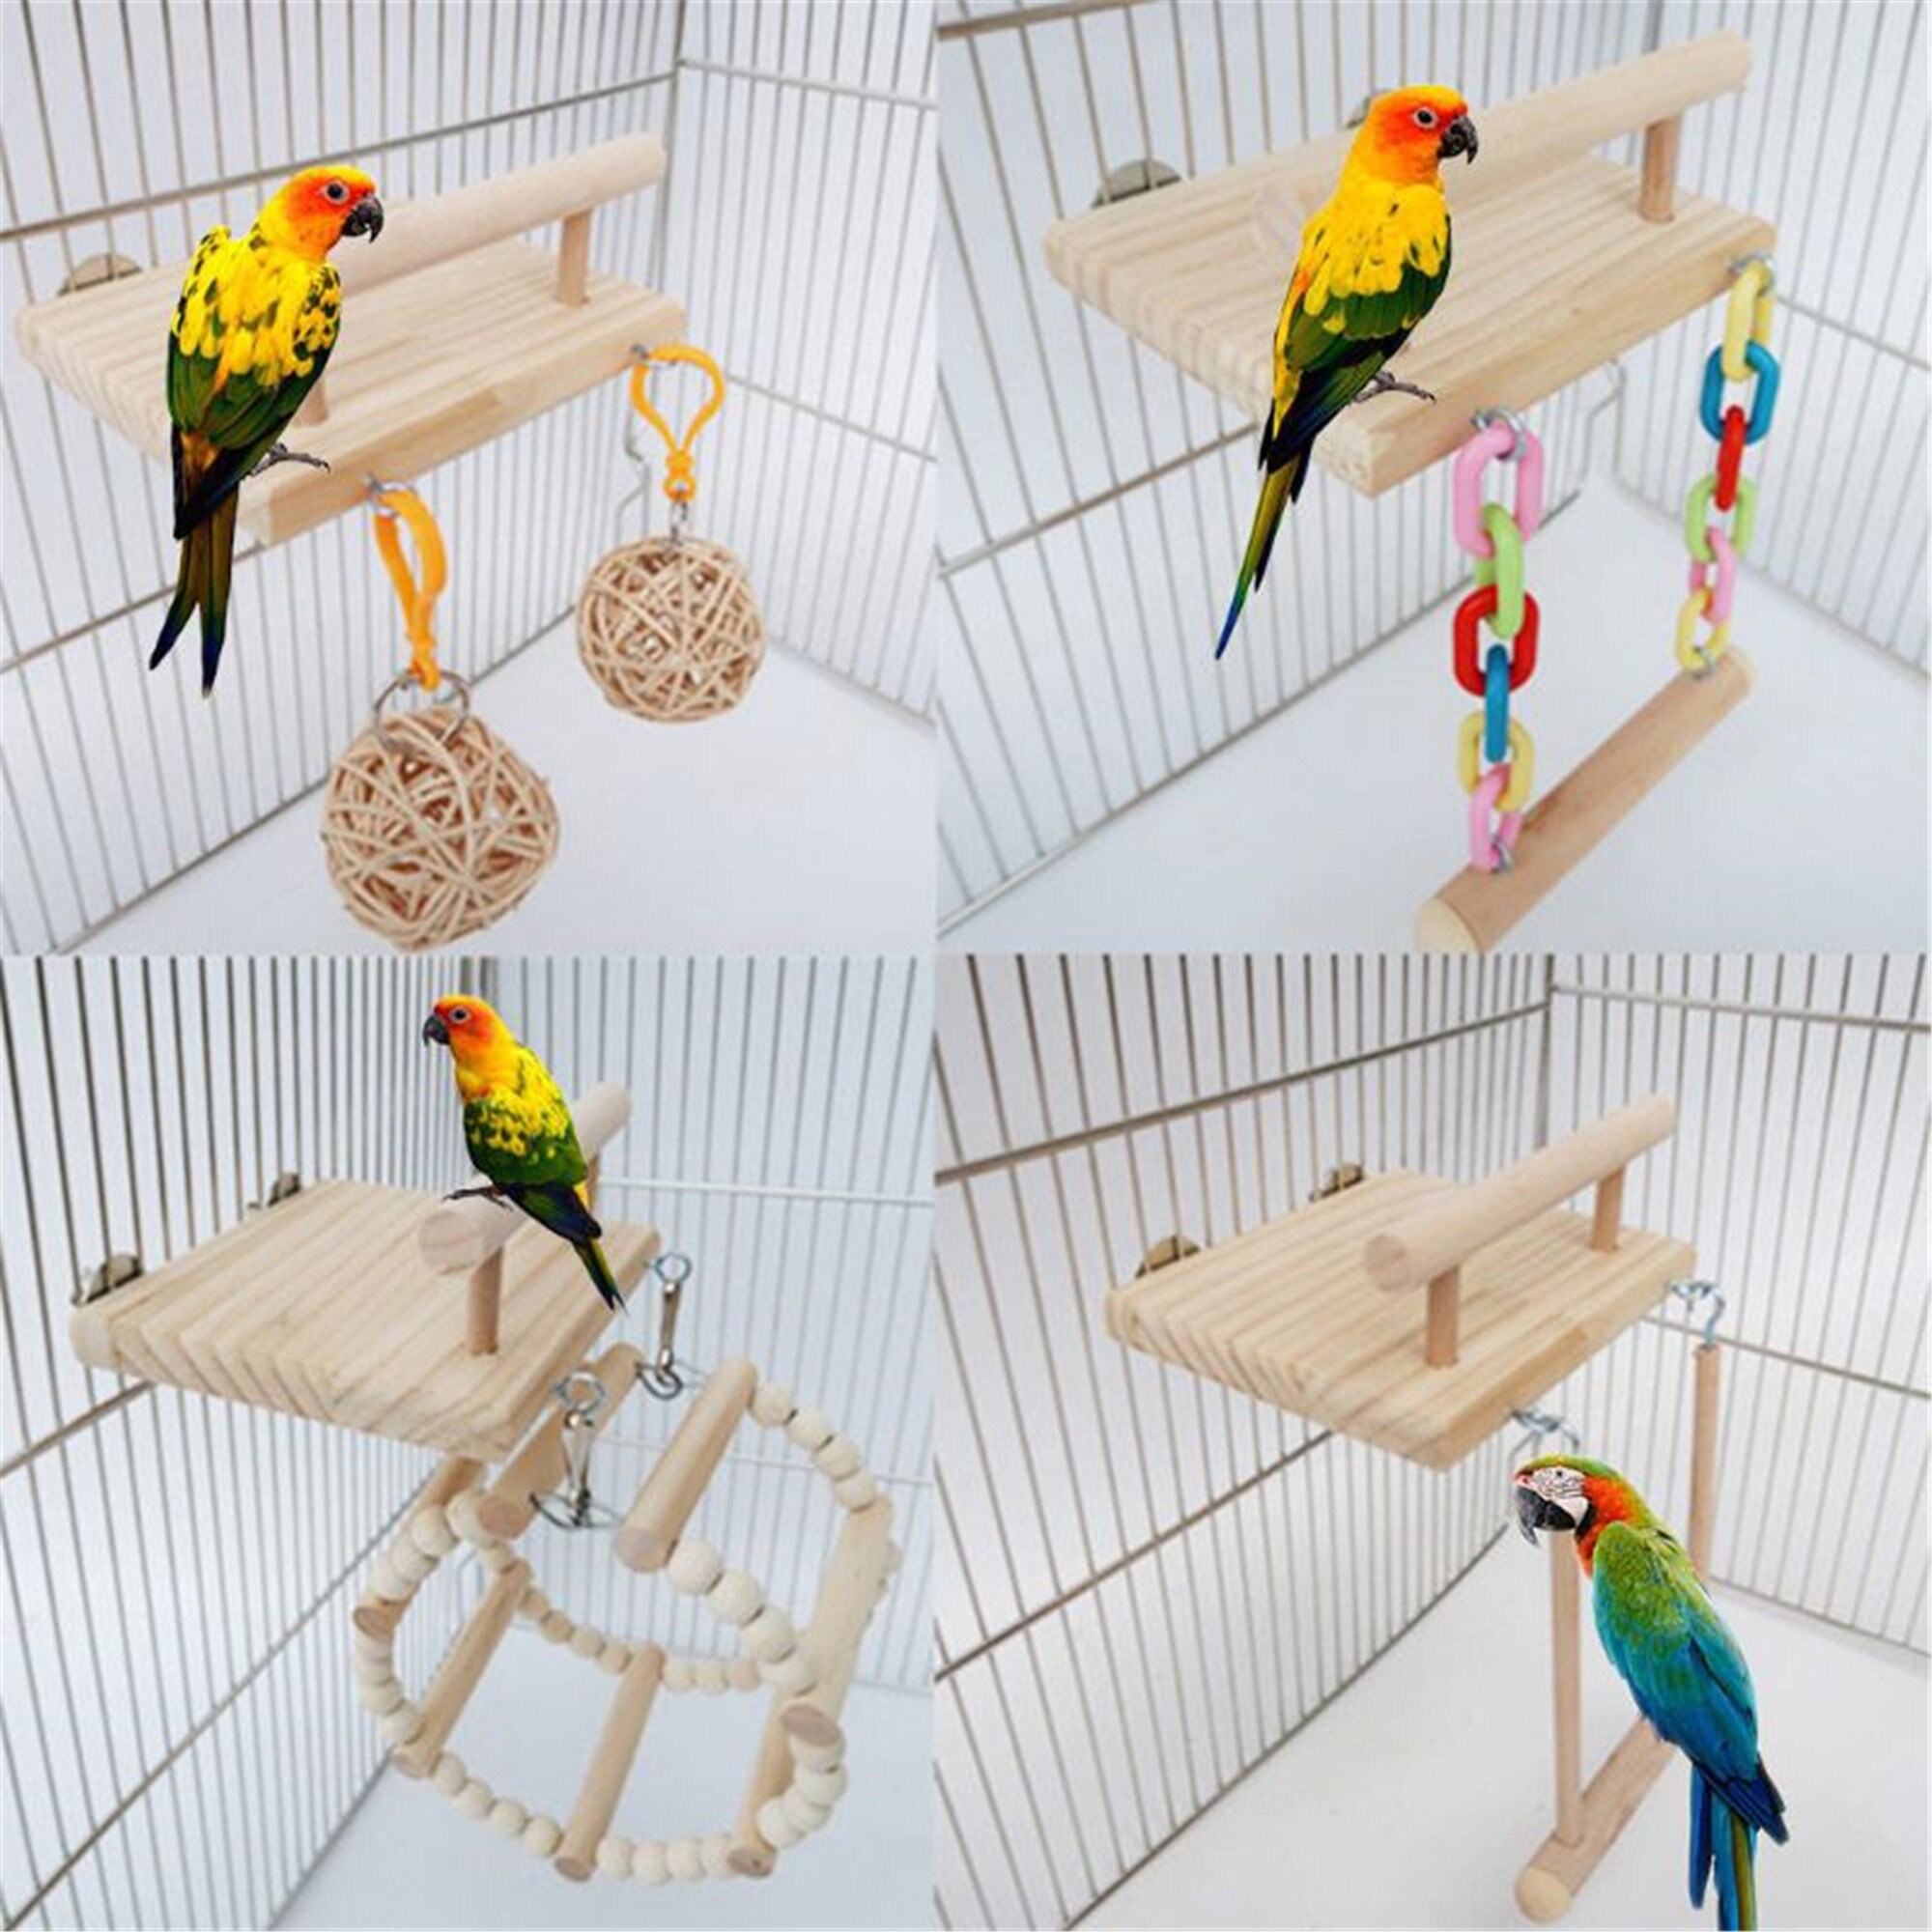 Jusney Bird Perch， Rough-surfaced Wooden Parrot Perch for Bird cage Perch Stand 